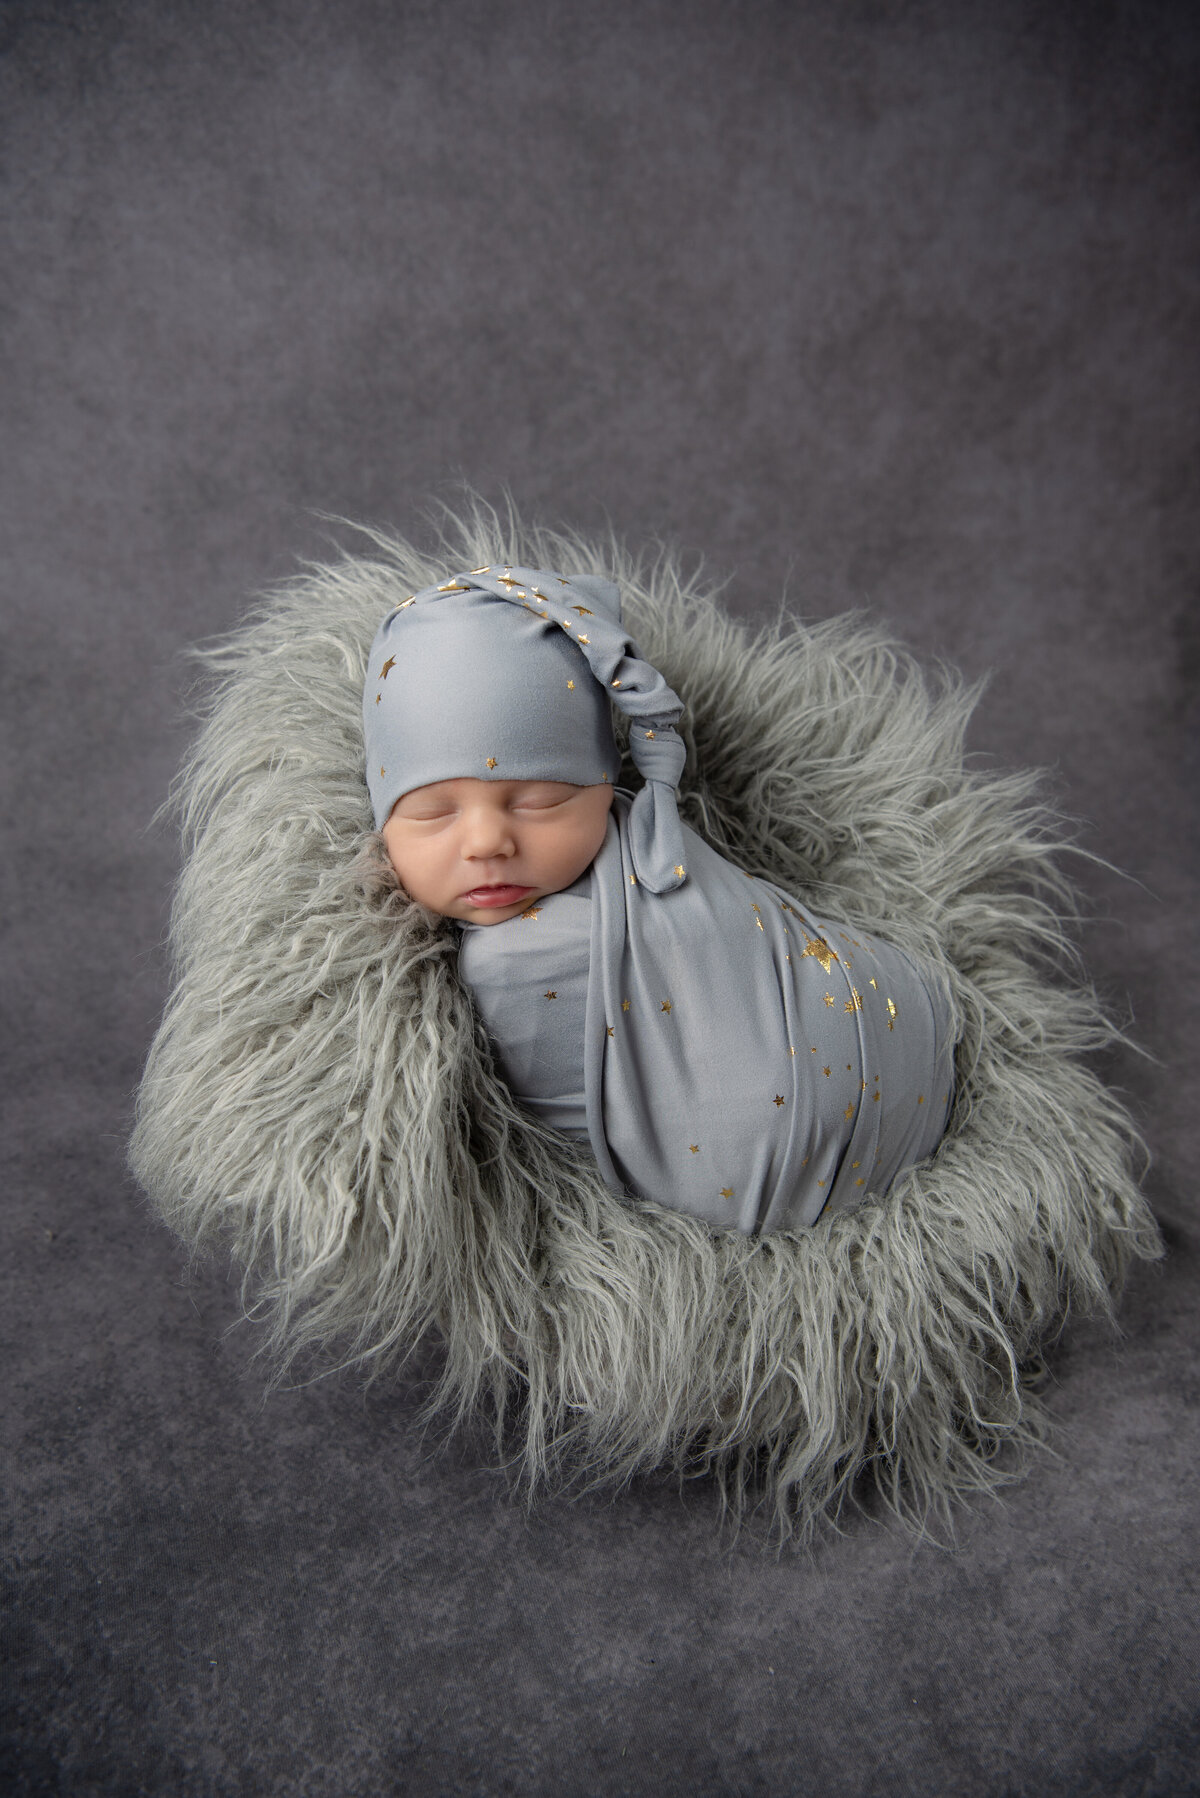 Dolci Momenti Photography, Pennsylvania award winning newborn